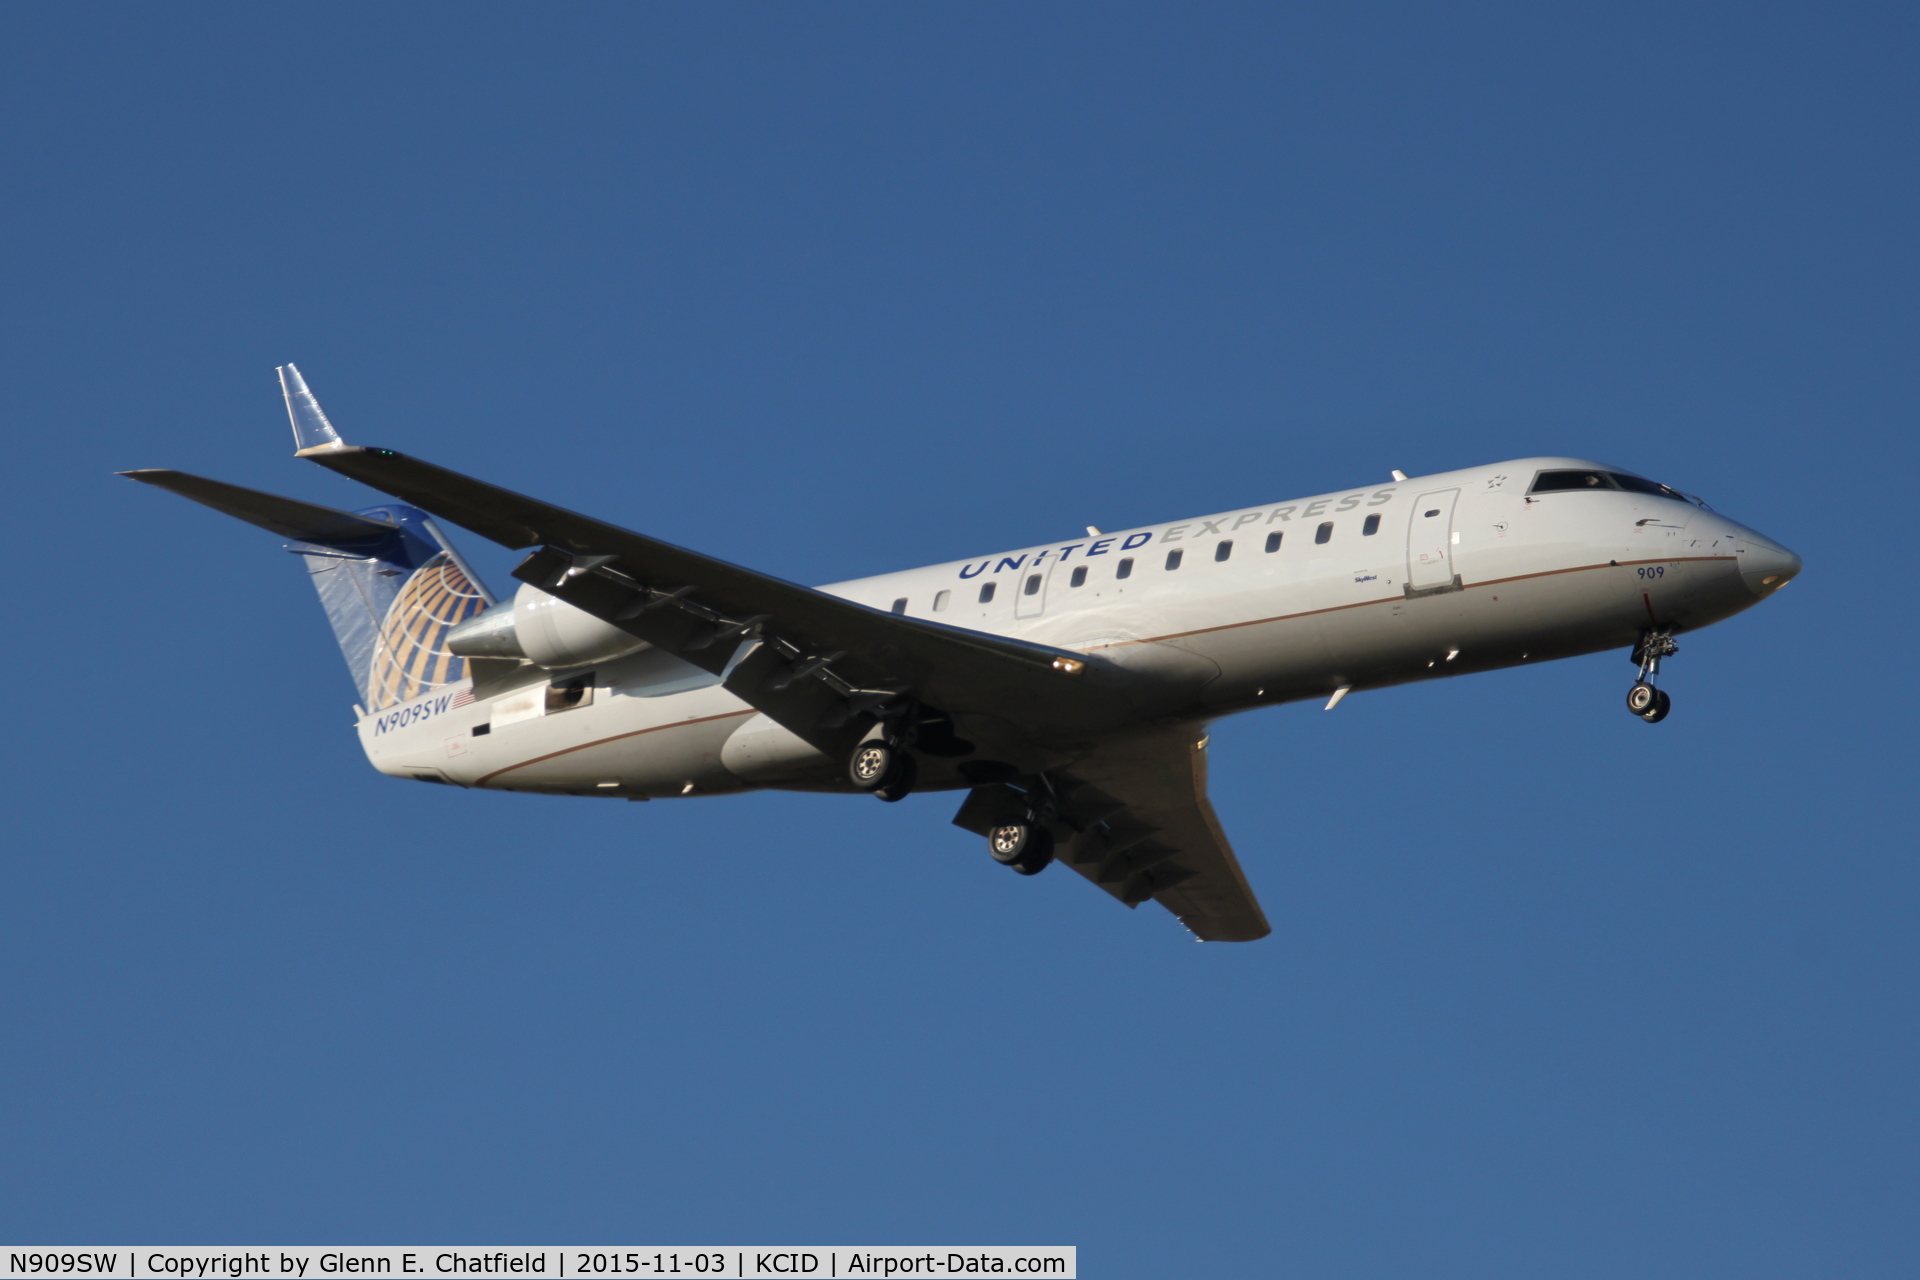 N909SW, 2001 Bombardier CRJ-200LR (CL-600-2B19) C/N 7558, On final approach to Runway 9